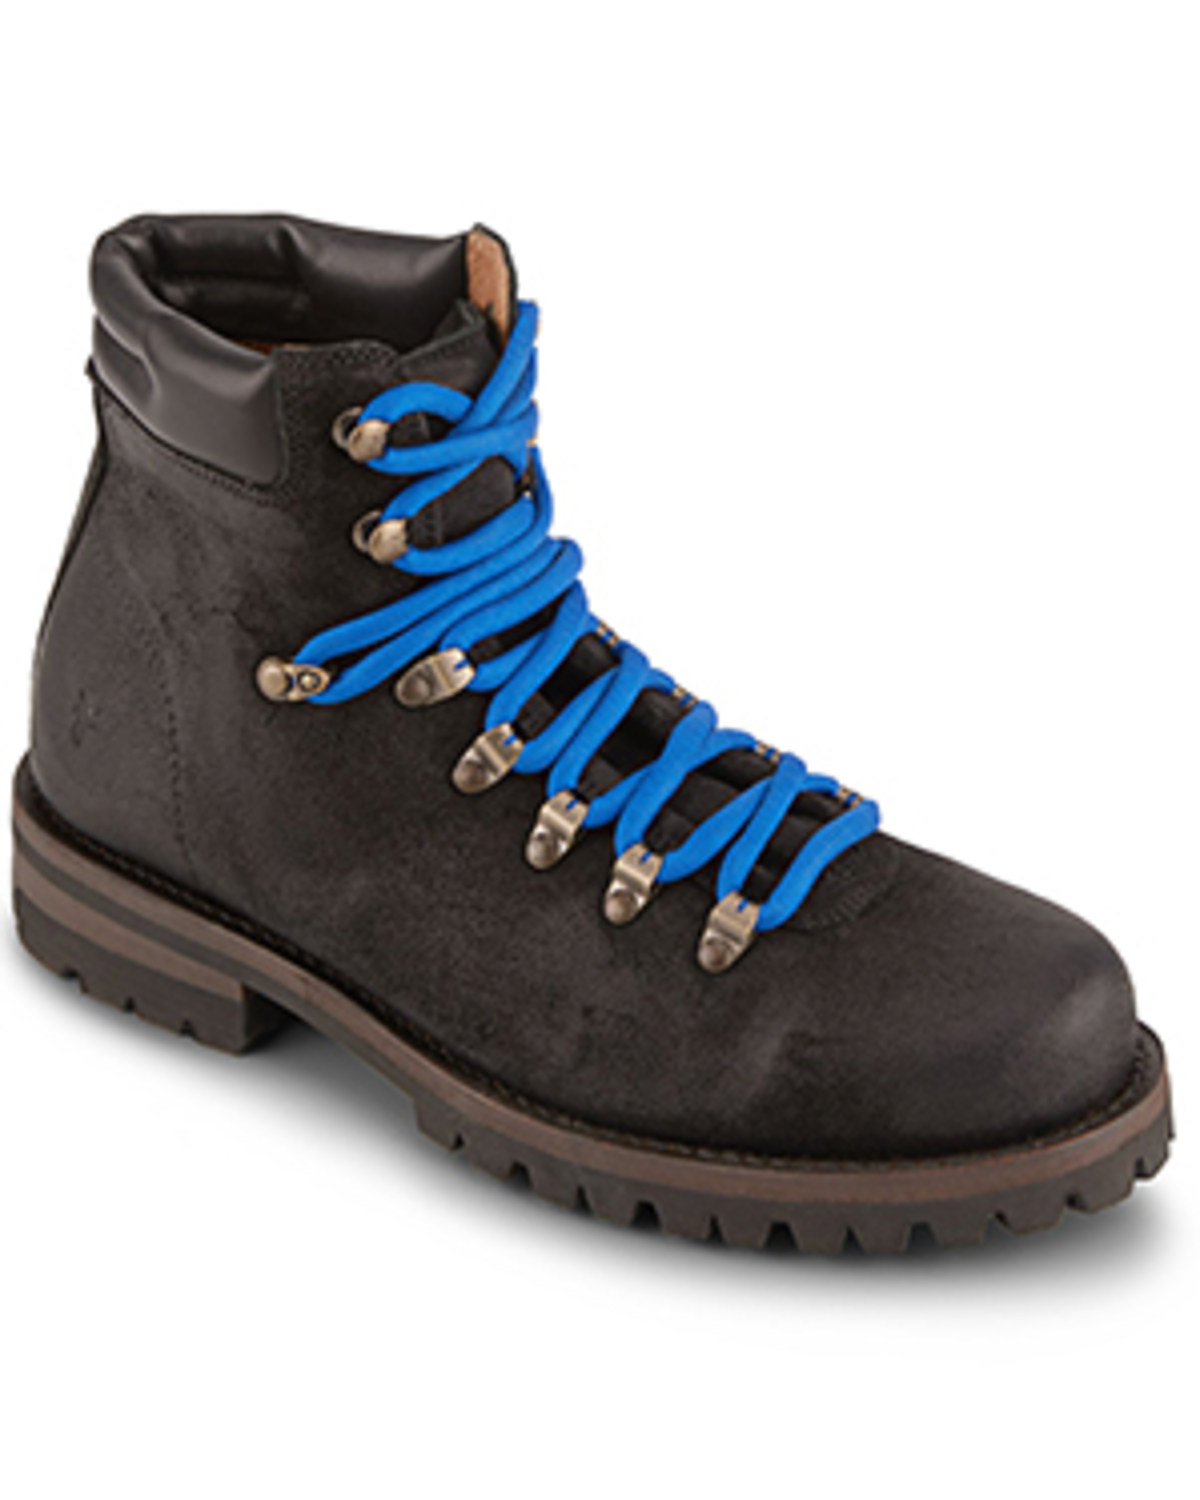 Frye Men's Hudson Hiker Lace-Up Boots